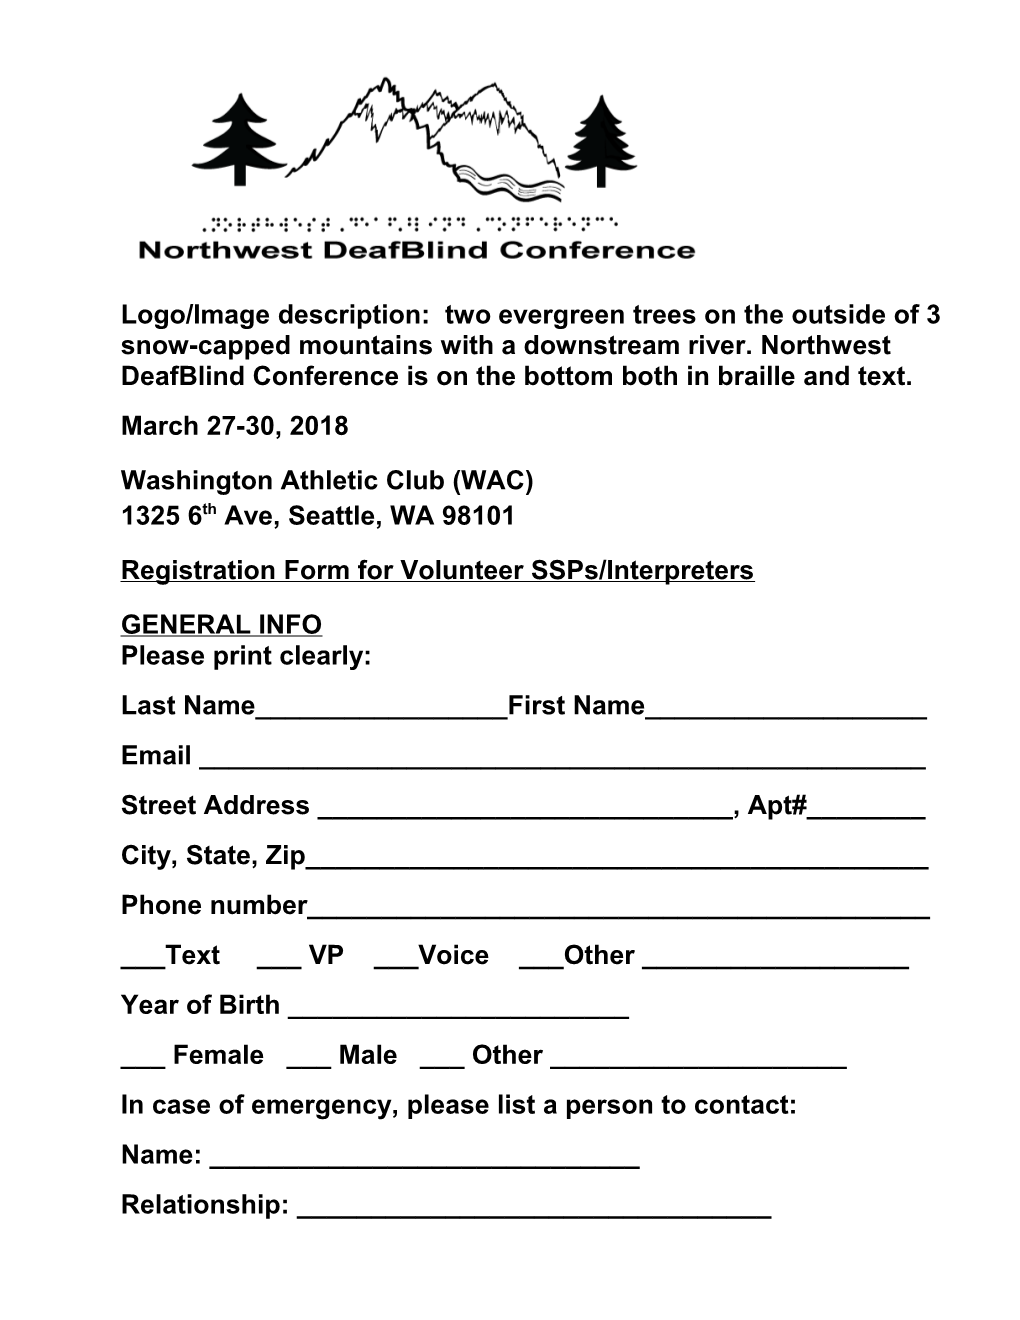 Washington Athletic Club (WAC)